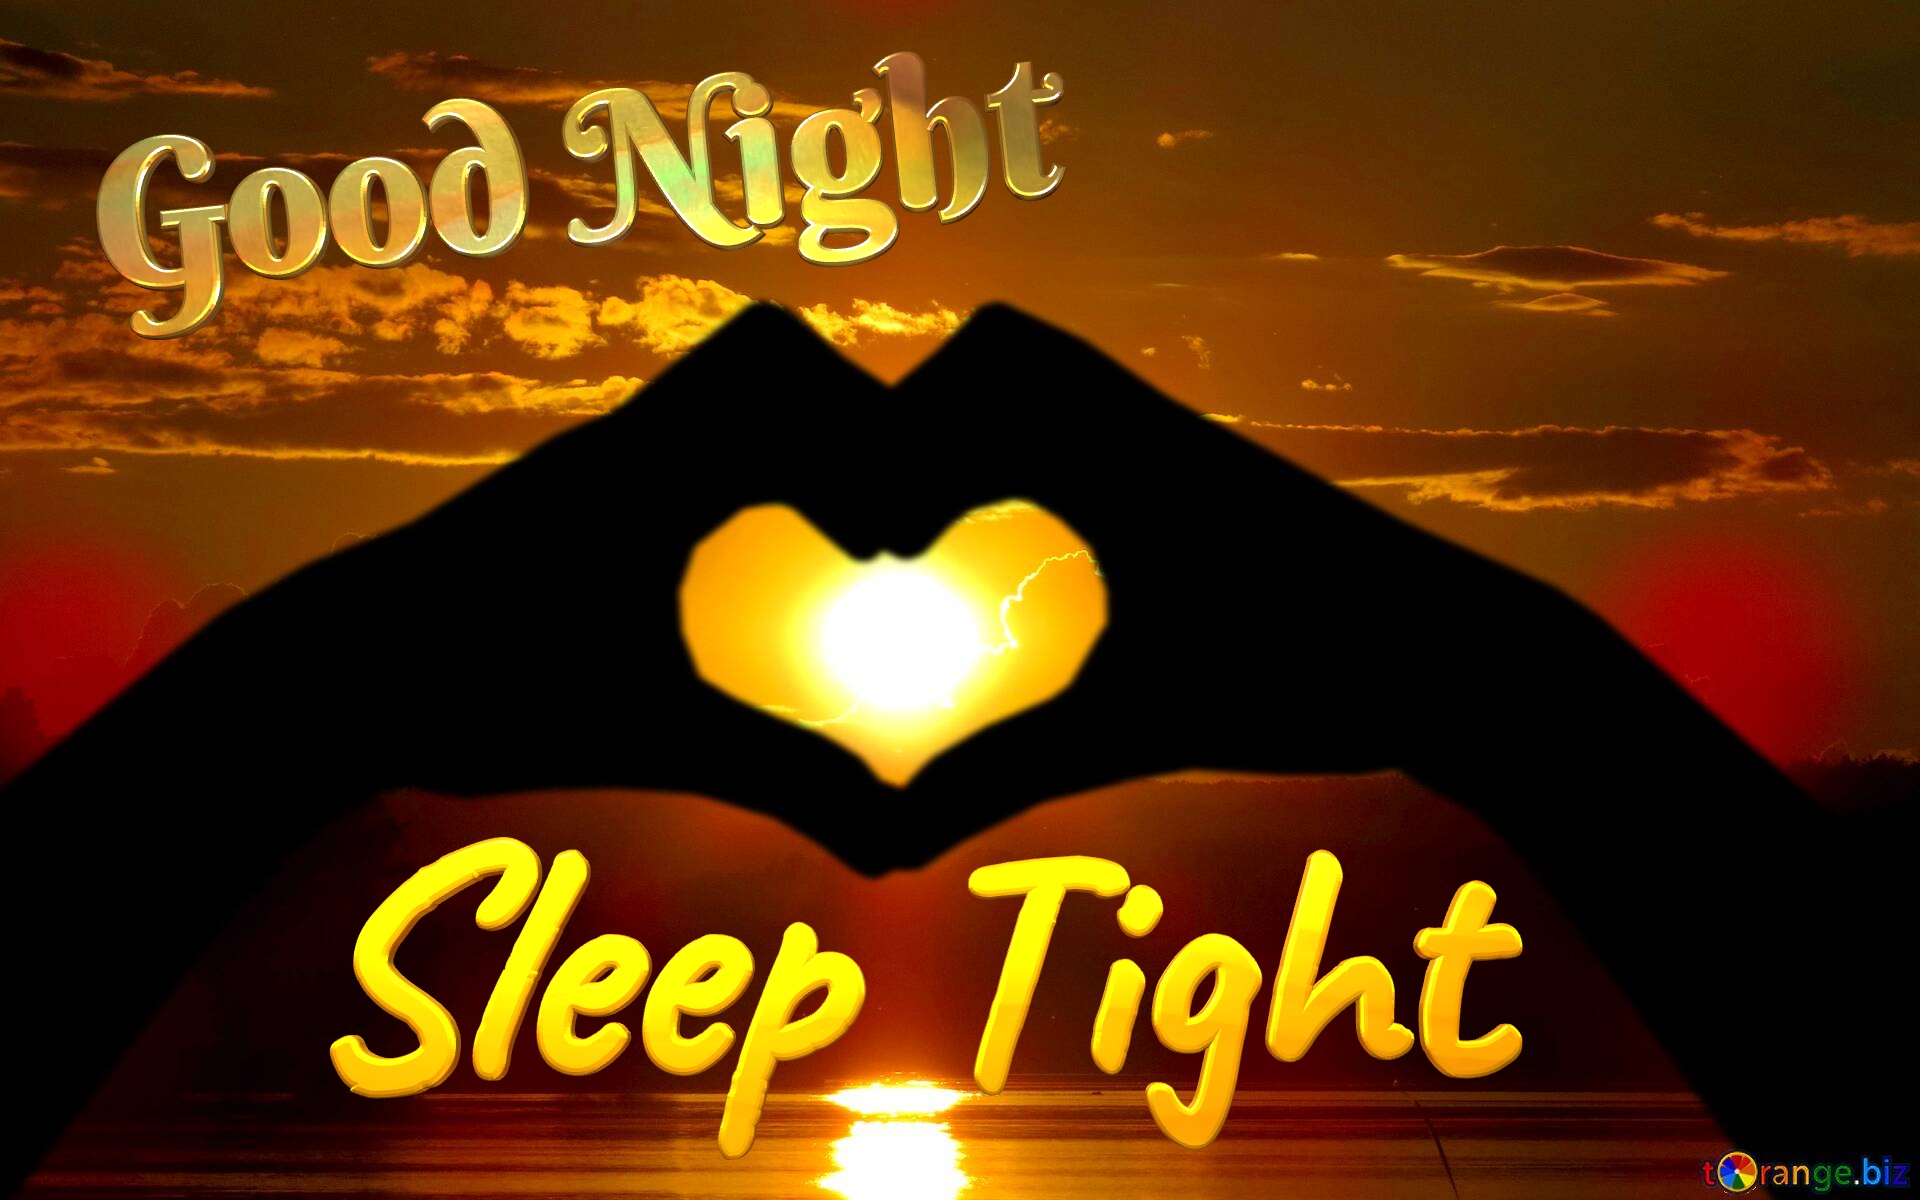 Good Night Sleep Tight Free Image - 3764